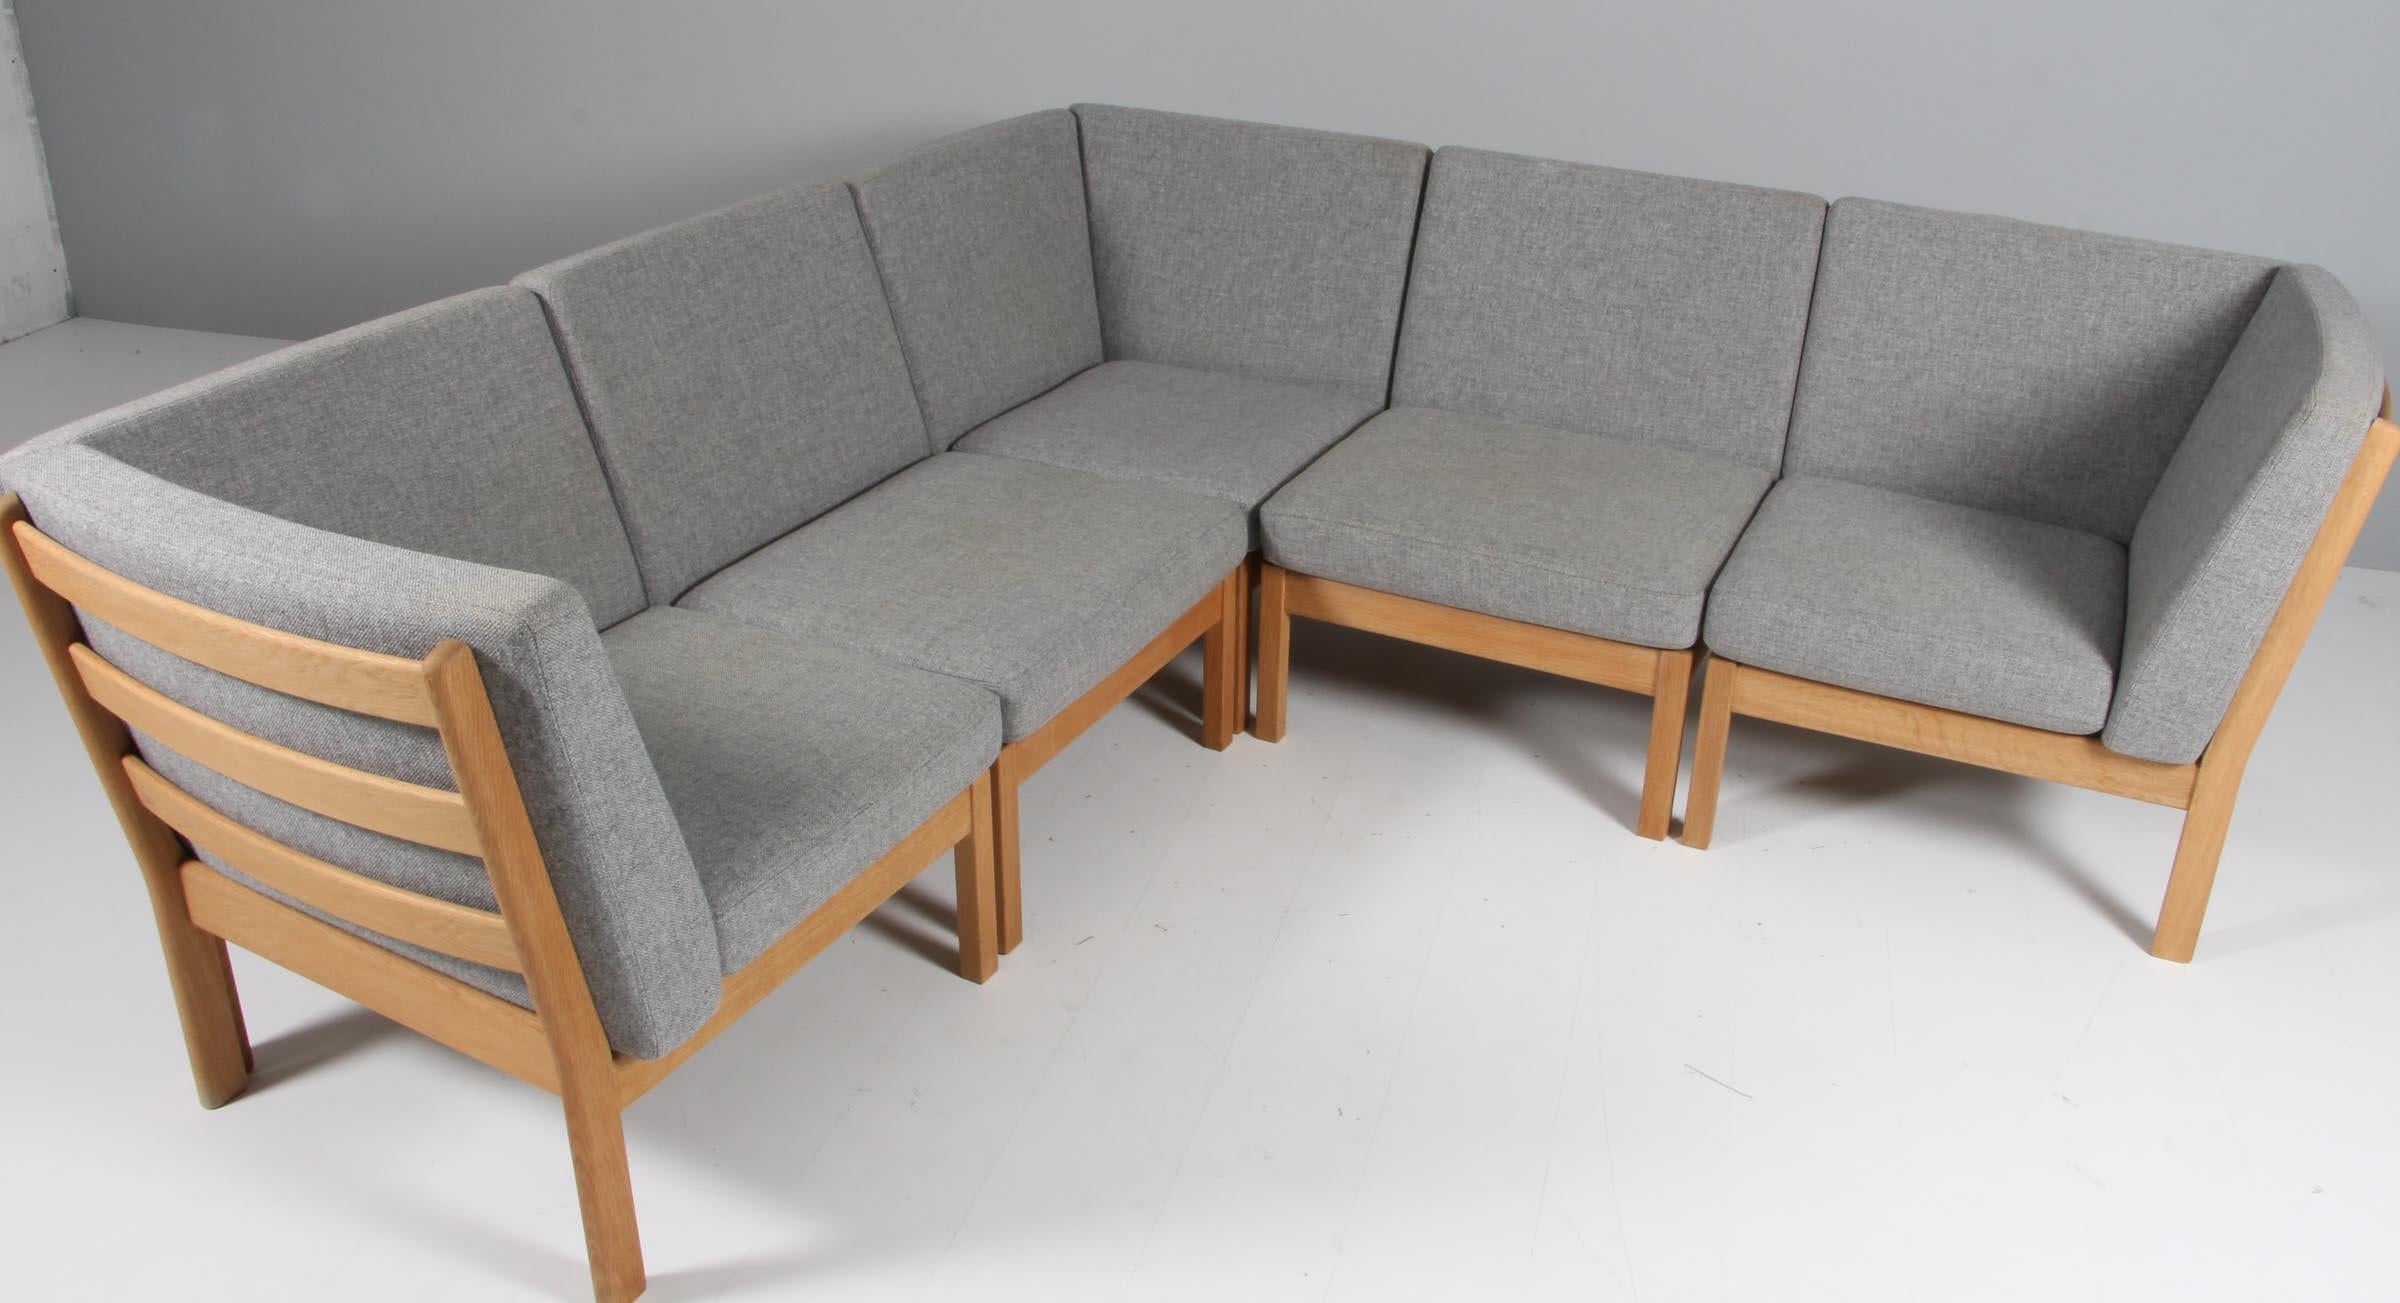 Hans J. Wegner modul / corner sofa with frame of soap treated oak. Original upholstered with Hallingdal 130 wool from Kvadrat. 

Model GE280, made by Getama.